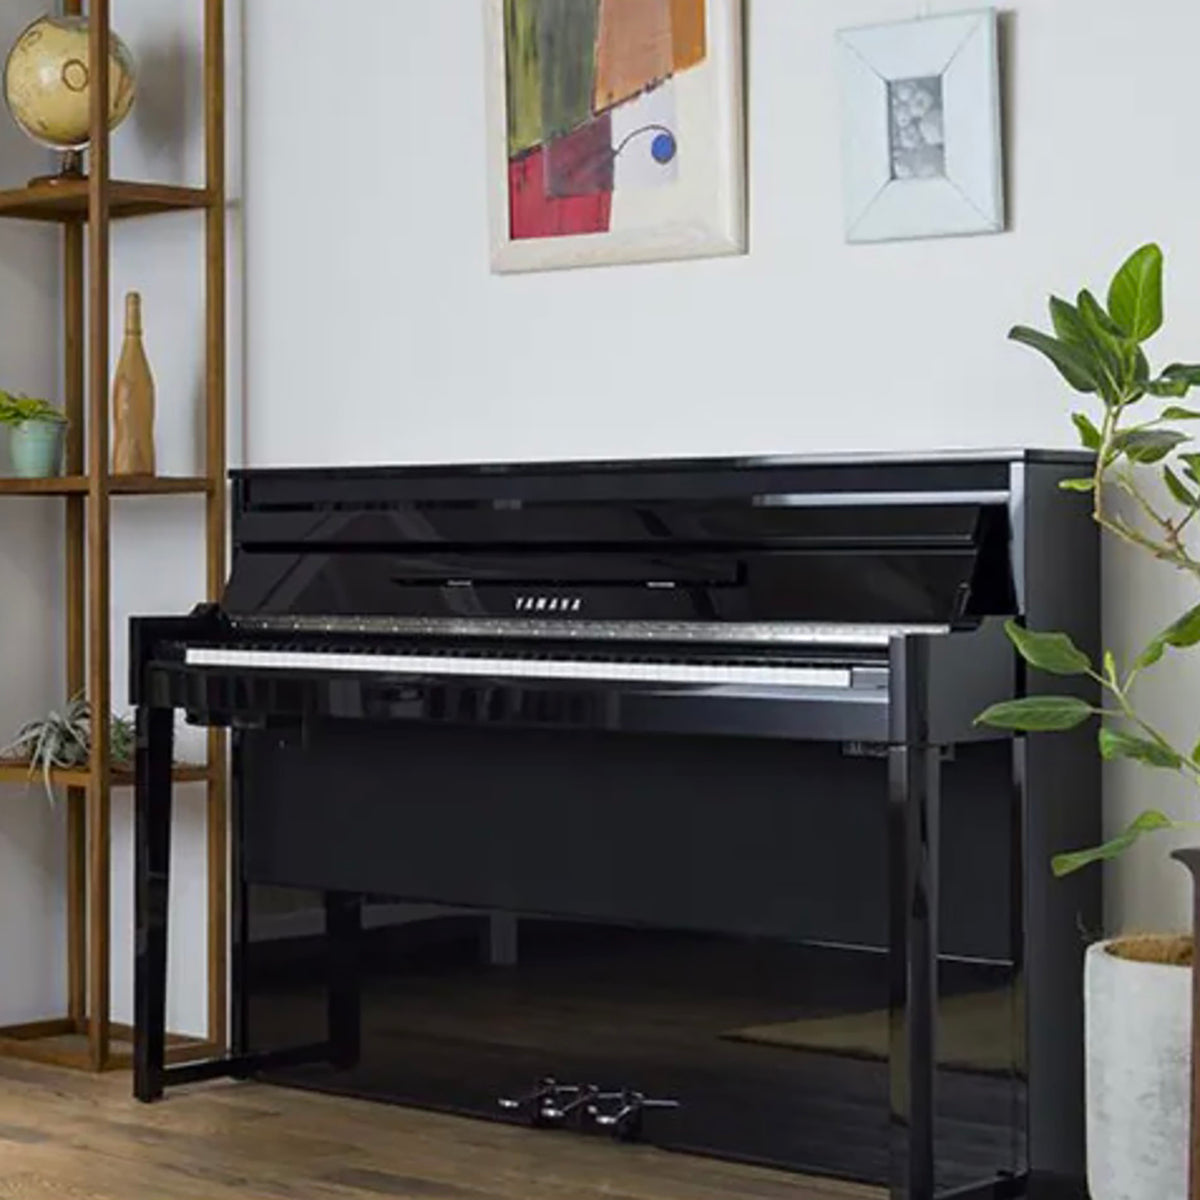 Yamaha AvantGrand NU1X Hybrid Piano - Polished Ebony in a stylish living room